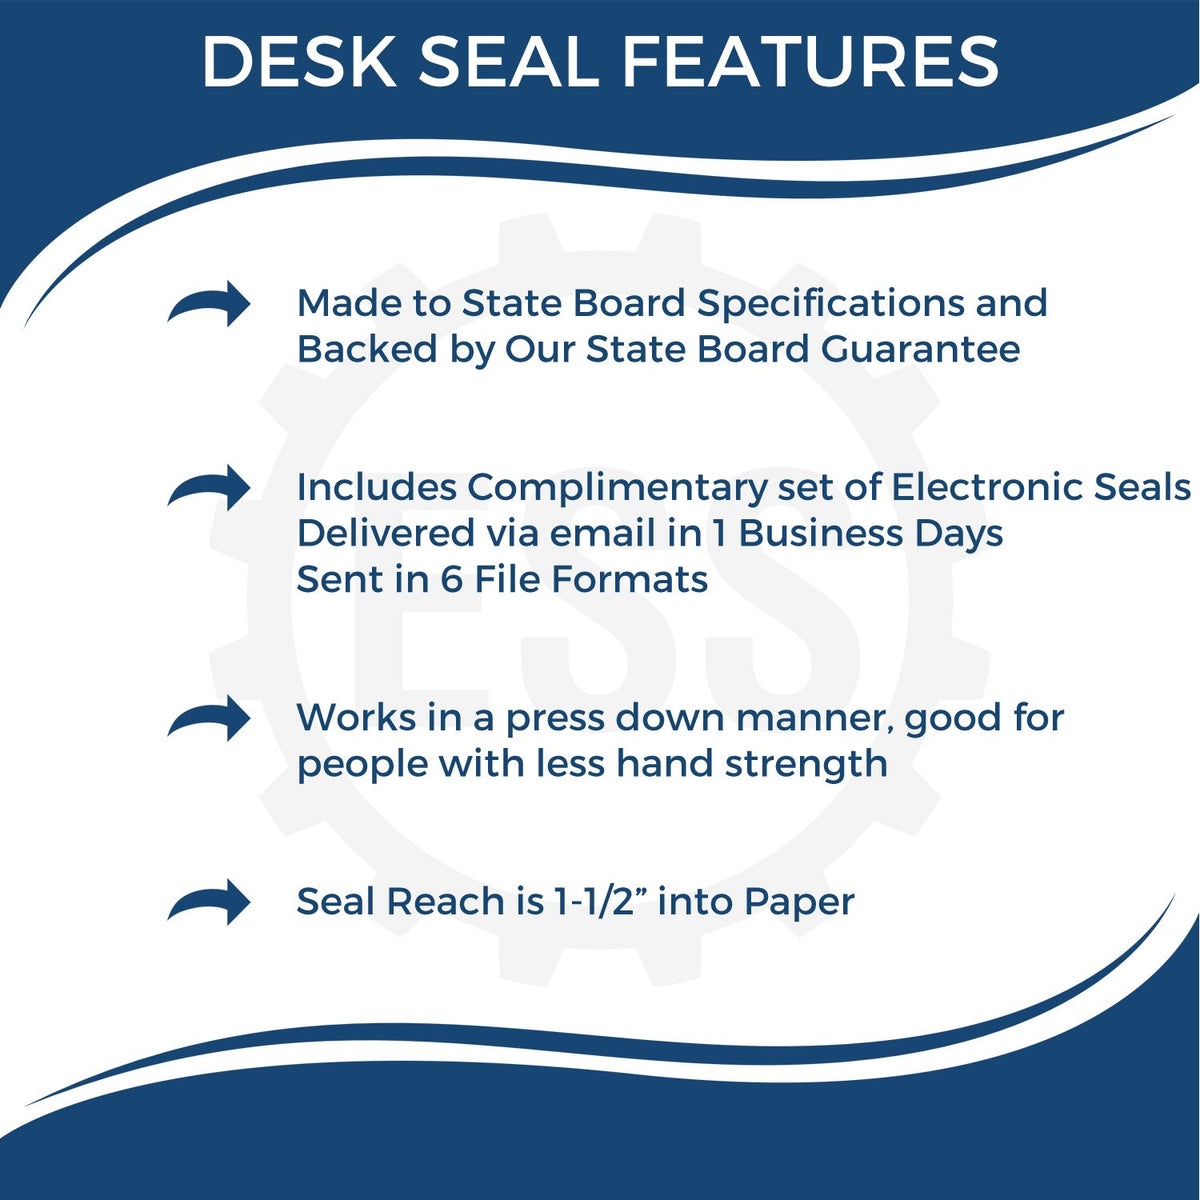 Washington Engineer Desk Seal